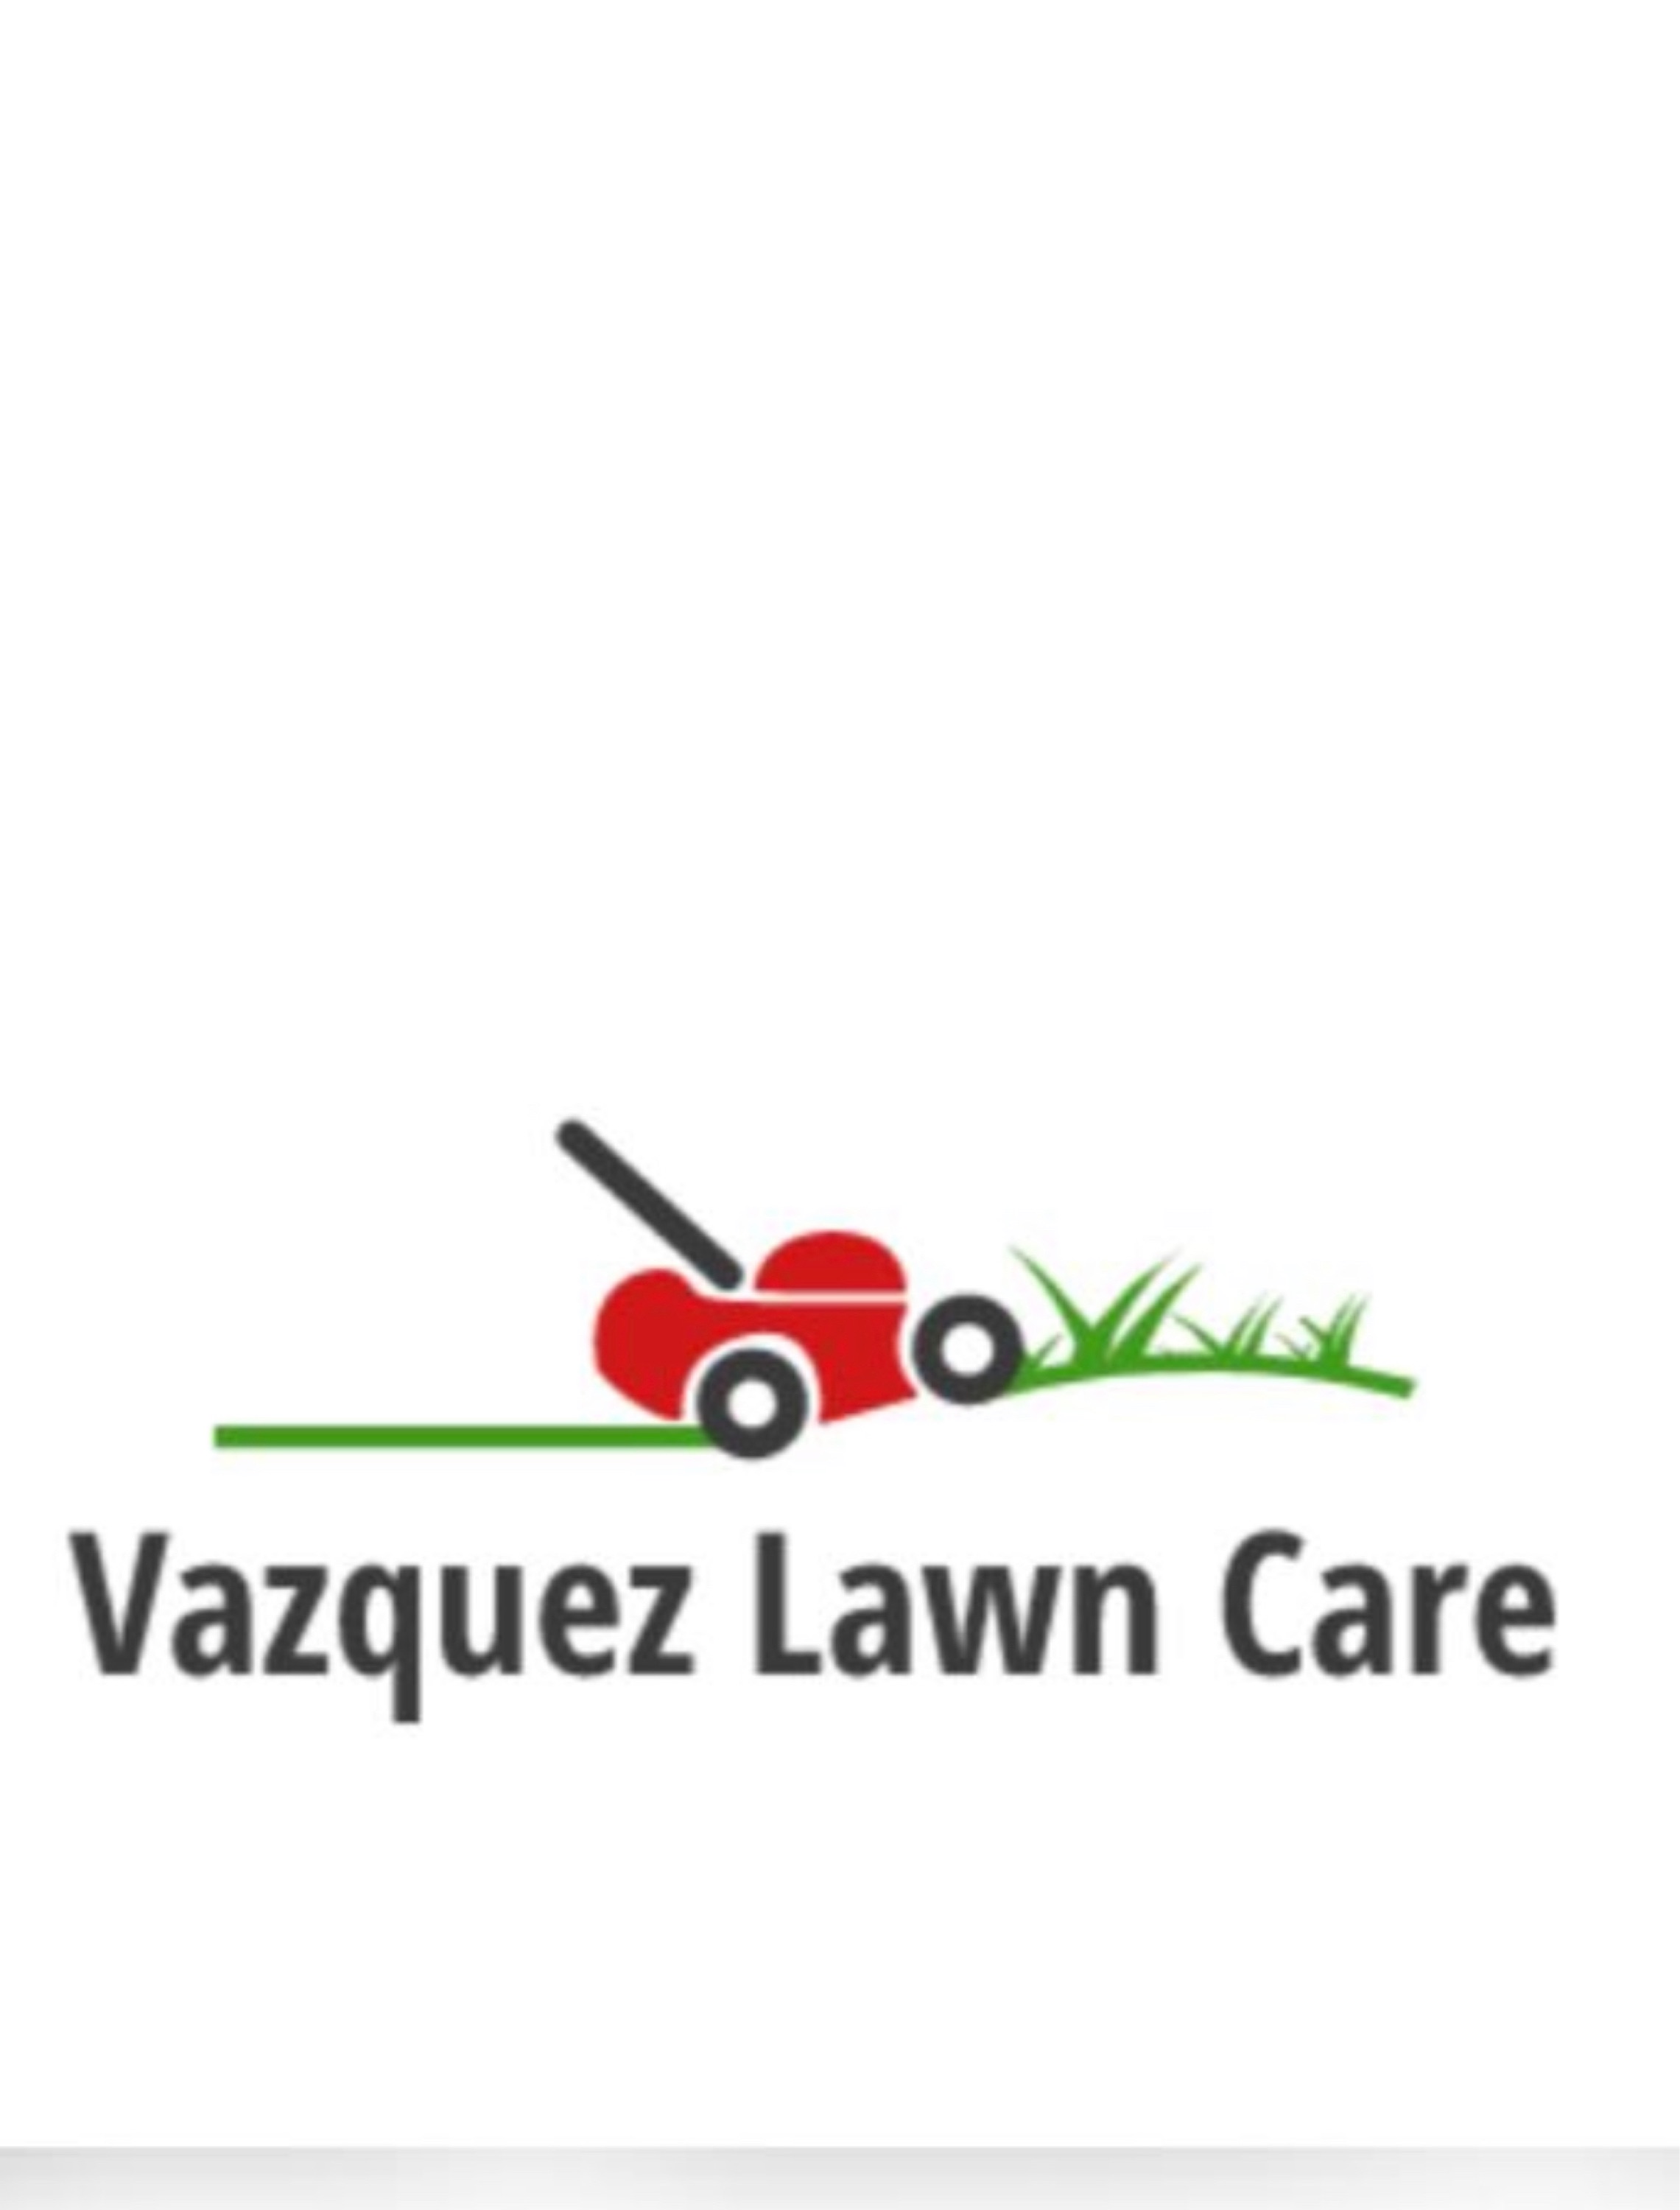 Vazquez Lawn Care Logo